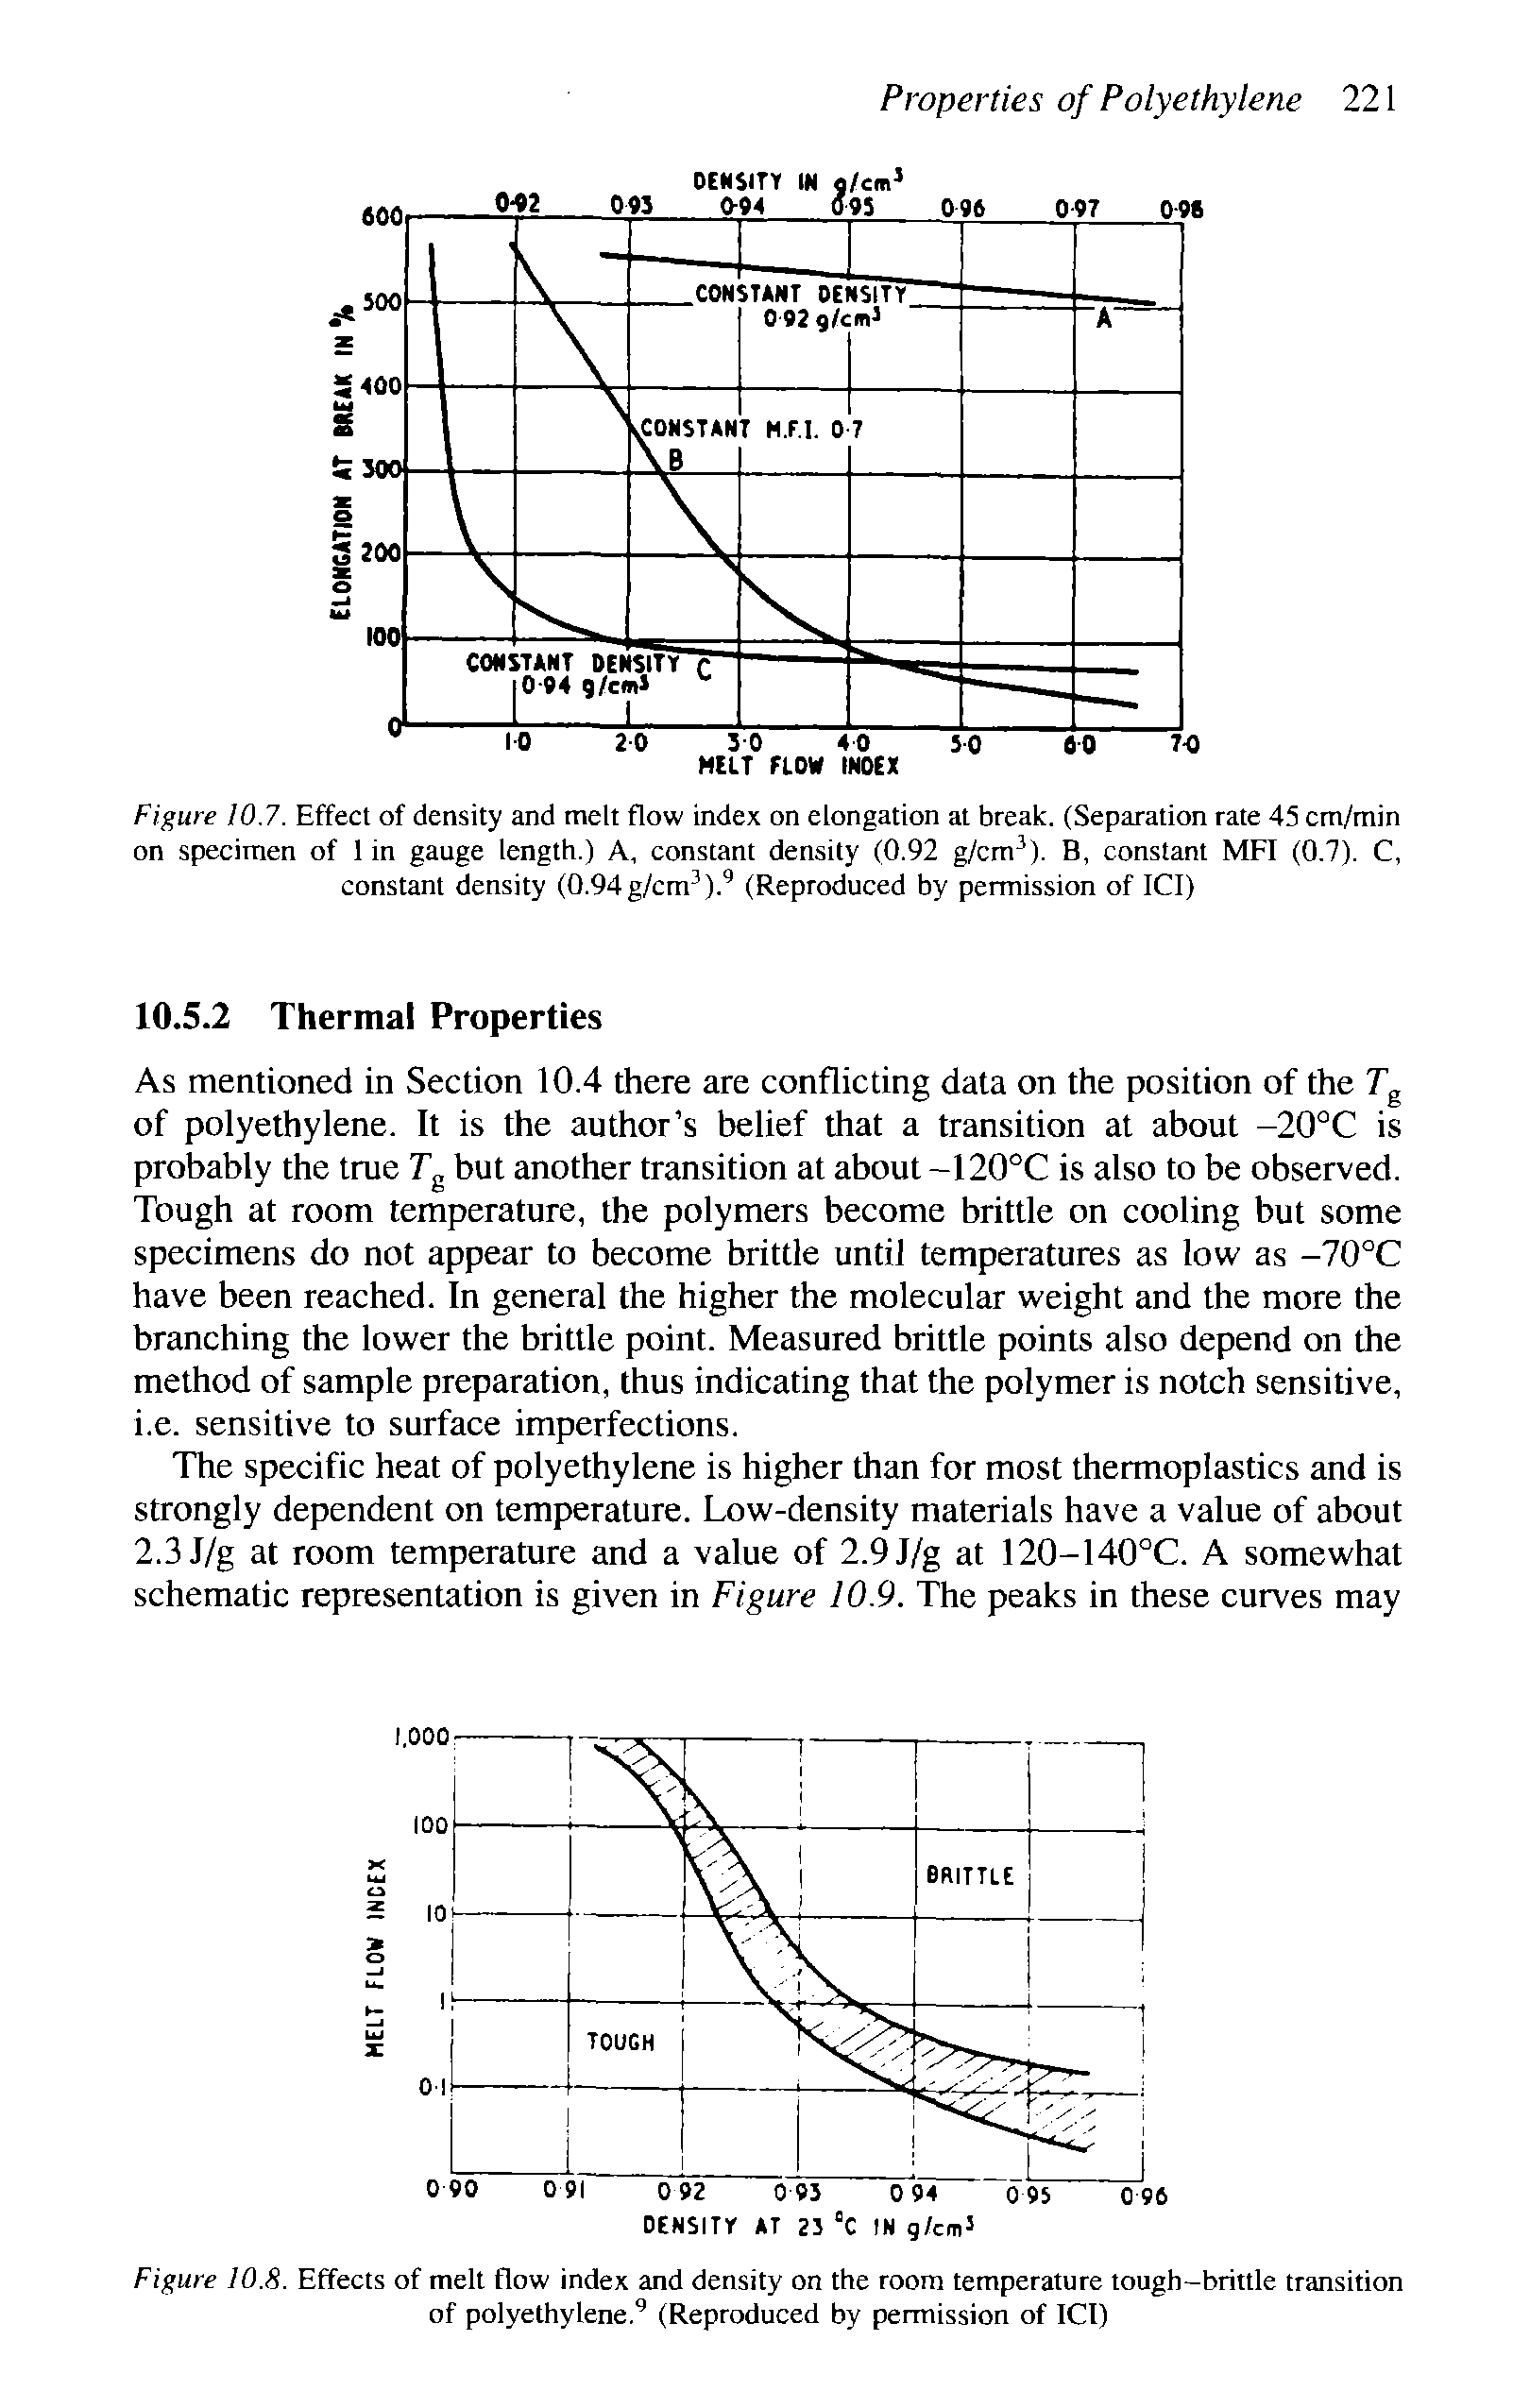 Figure 10.7. Effect of density and melt flow index on elongation at break. (Separation rate 45 em/min on specimen of 1 in gauge length.) A, constant density (0.92 g/cm ). B, constant MFI (0.7). C, constant density (0.94 g/cm ). (Reproduced by permission of ICI)...